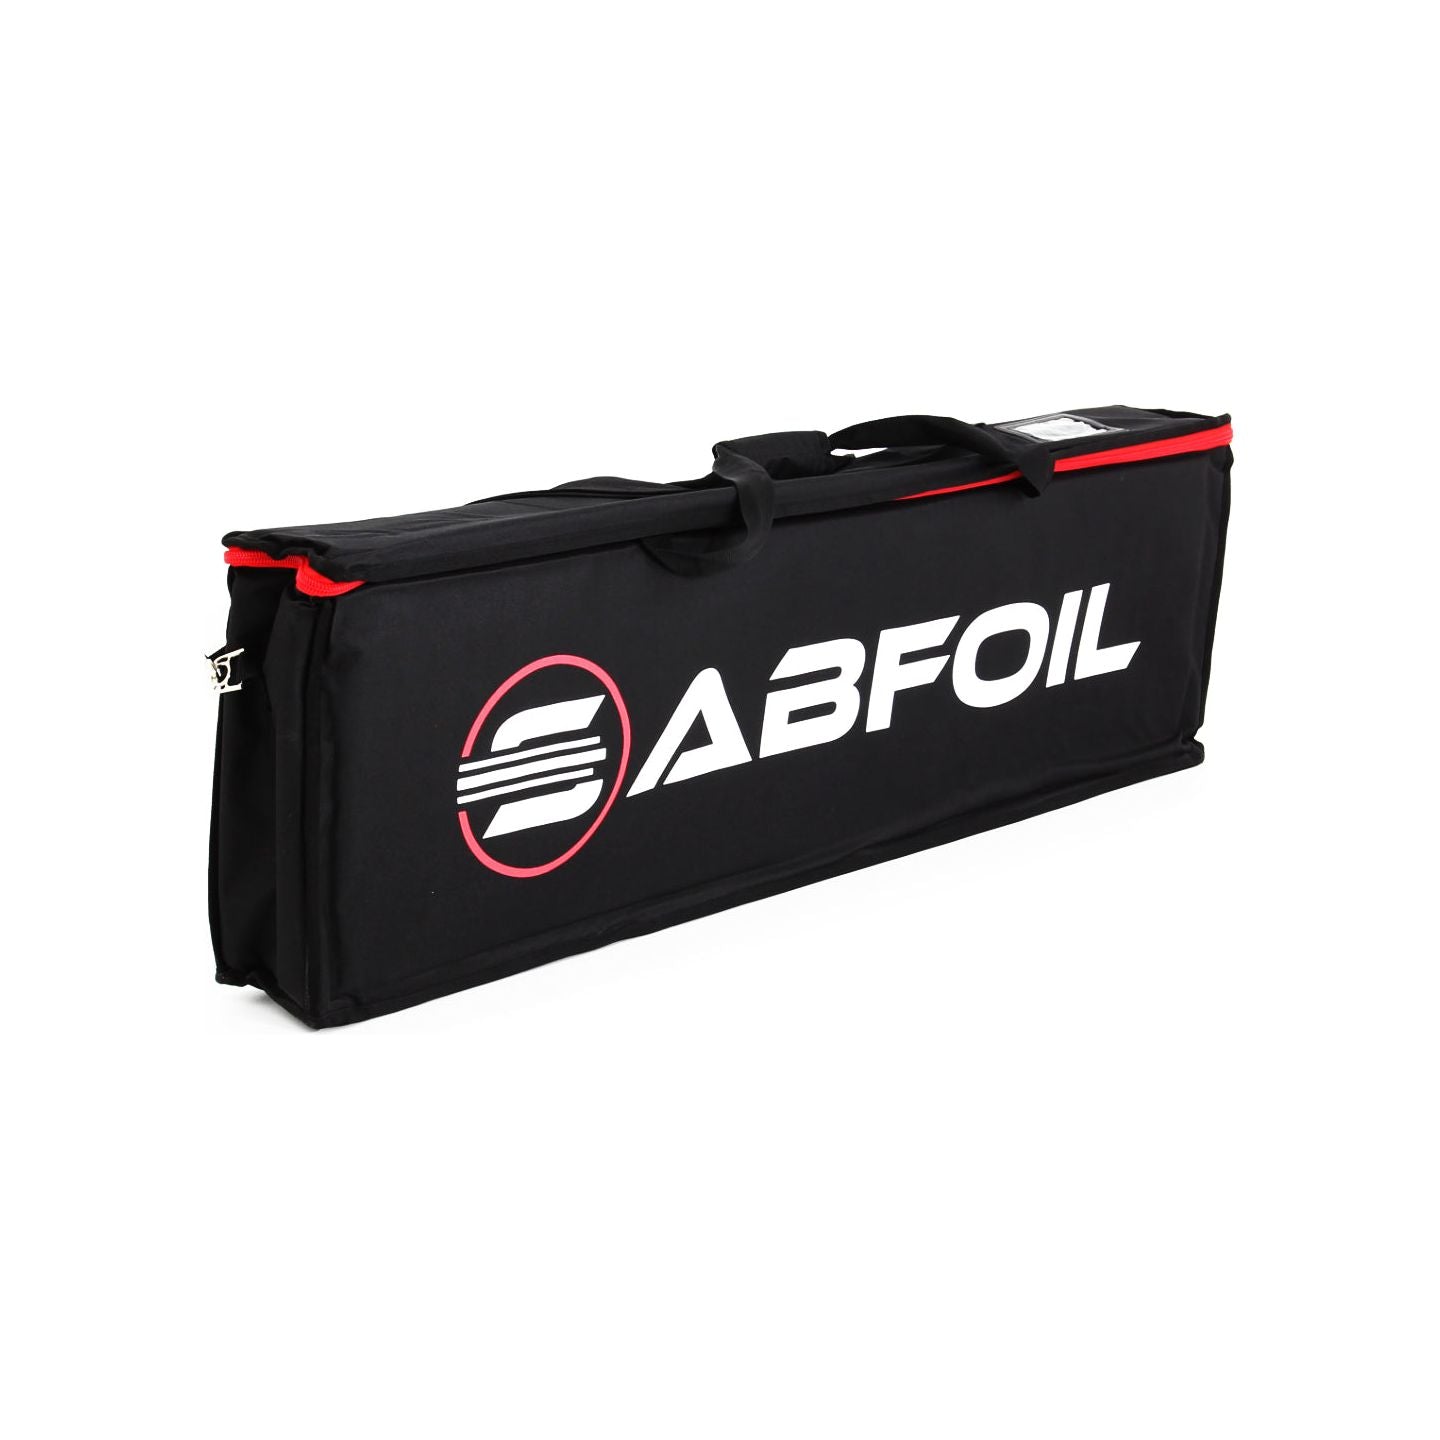 Sabfoil Razor Pro 775/76P | Hydrofoil Set